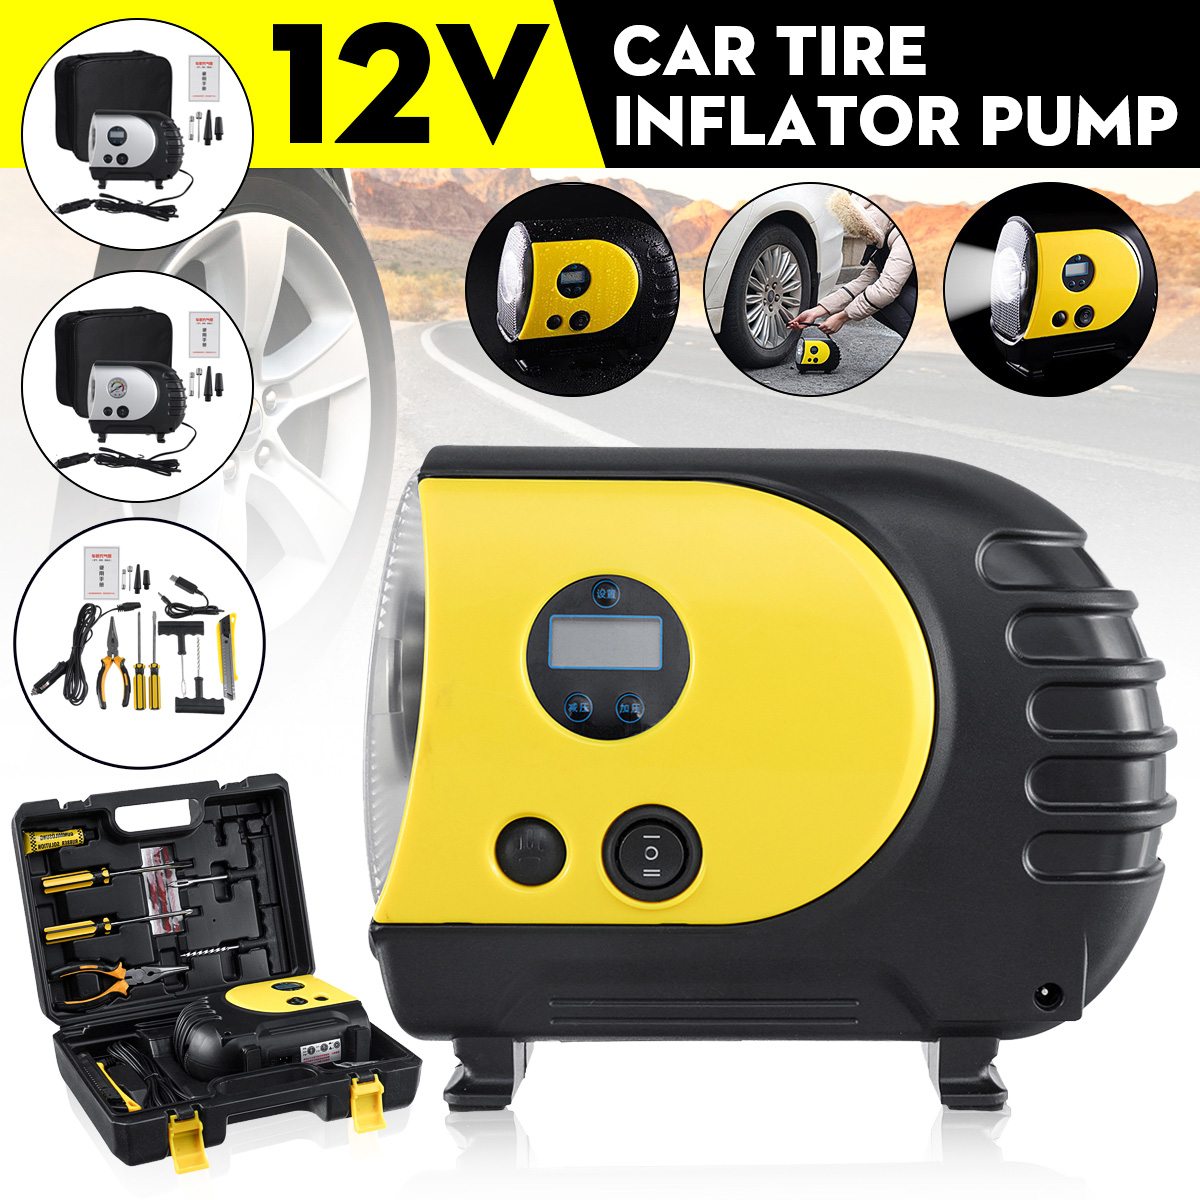 12V-Auto-Car-Tire-Inflator-Pump-Tyre-Air-Compressor-Portable-Heavy-Duty-Digital-Display-Tire-Inflato-1640833-1